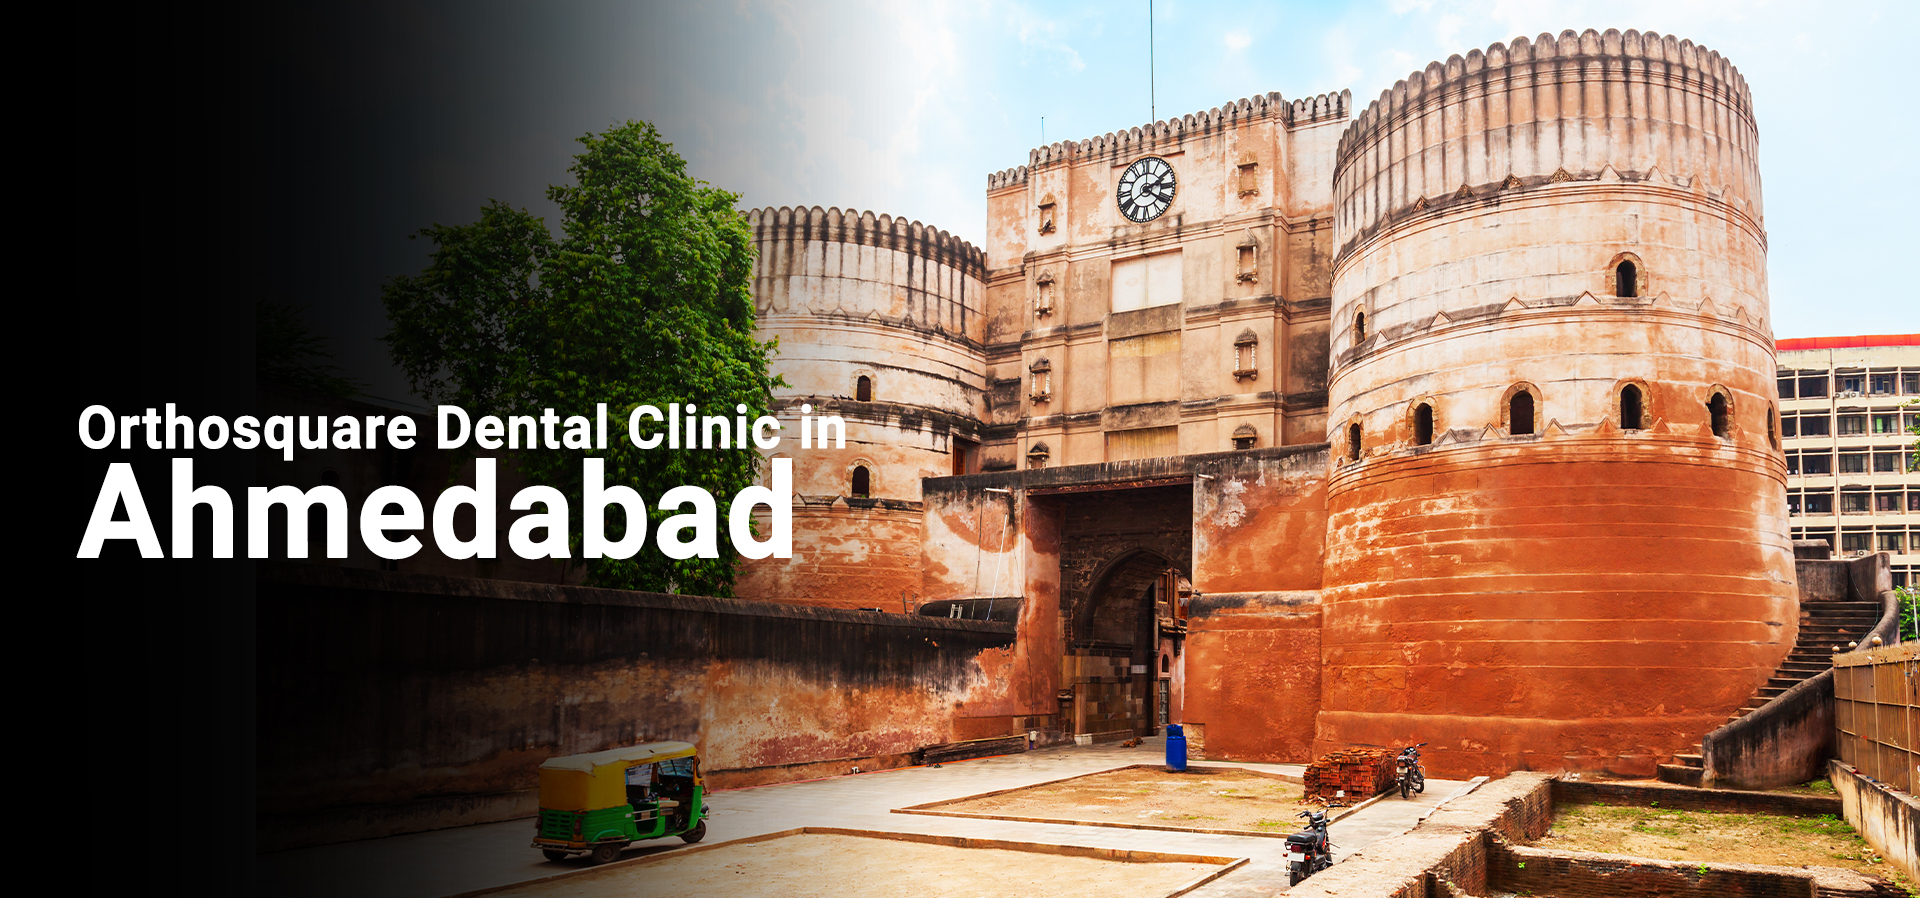 Ahmedabad orthosquare dental clinic